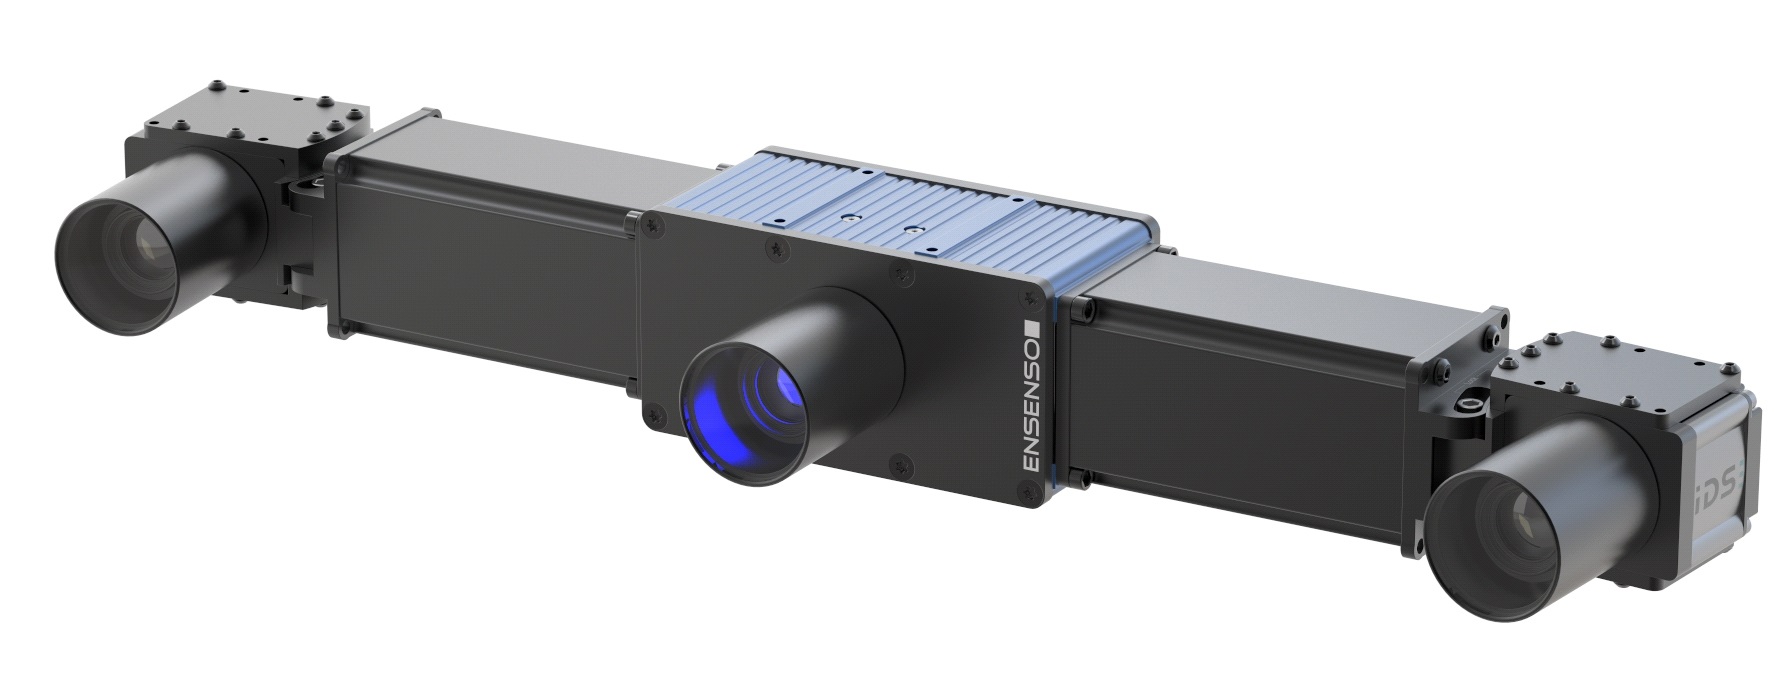 New models of the Ensenso X 3D camera